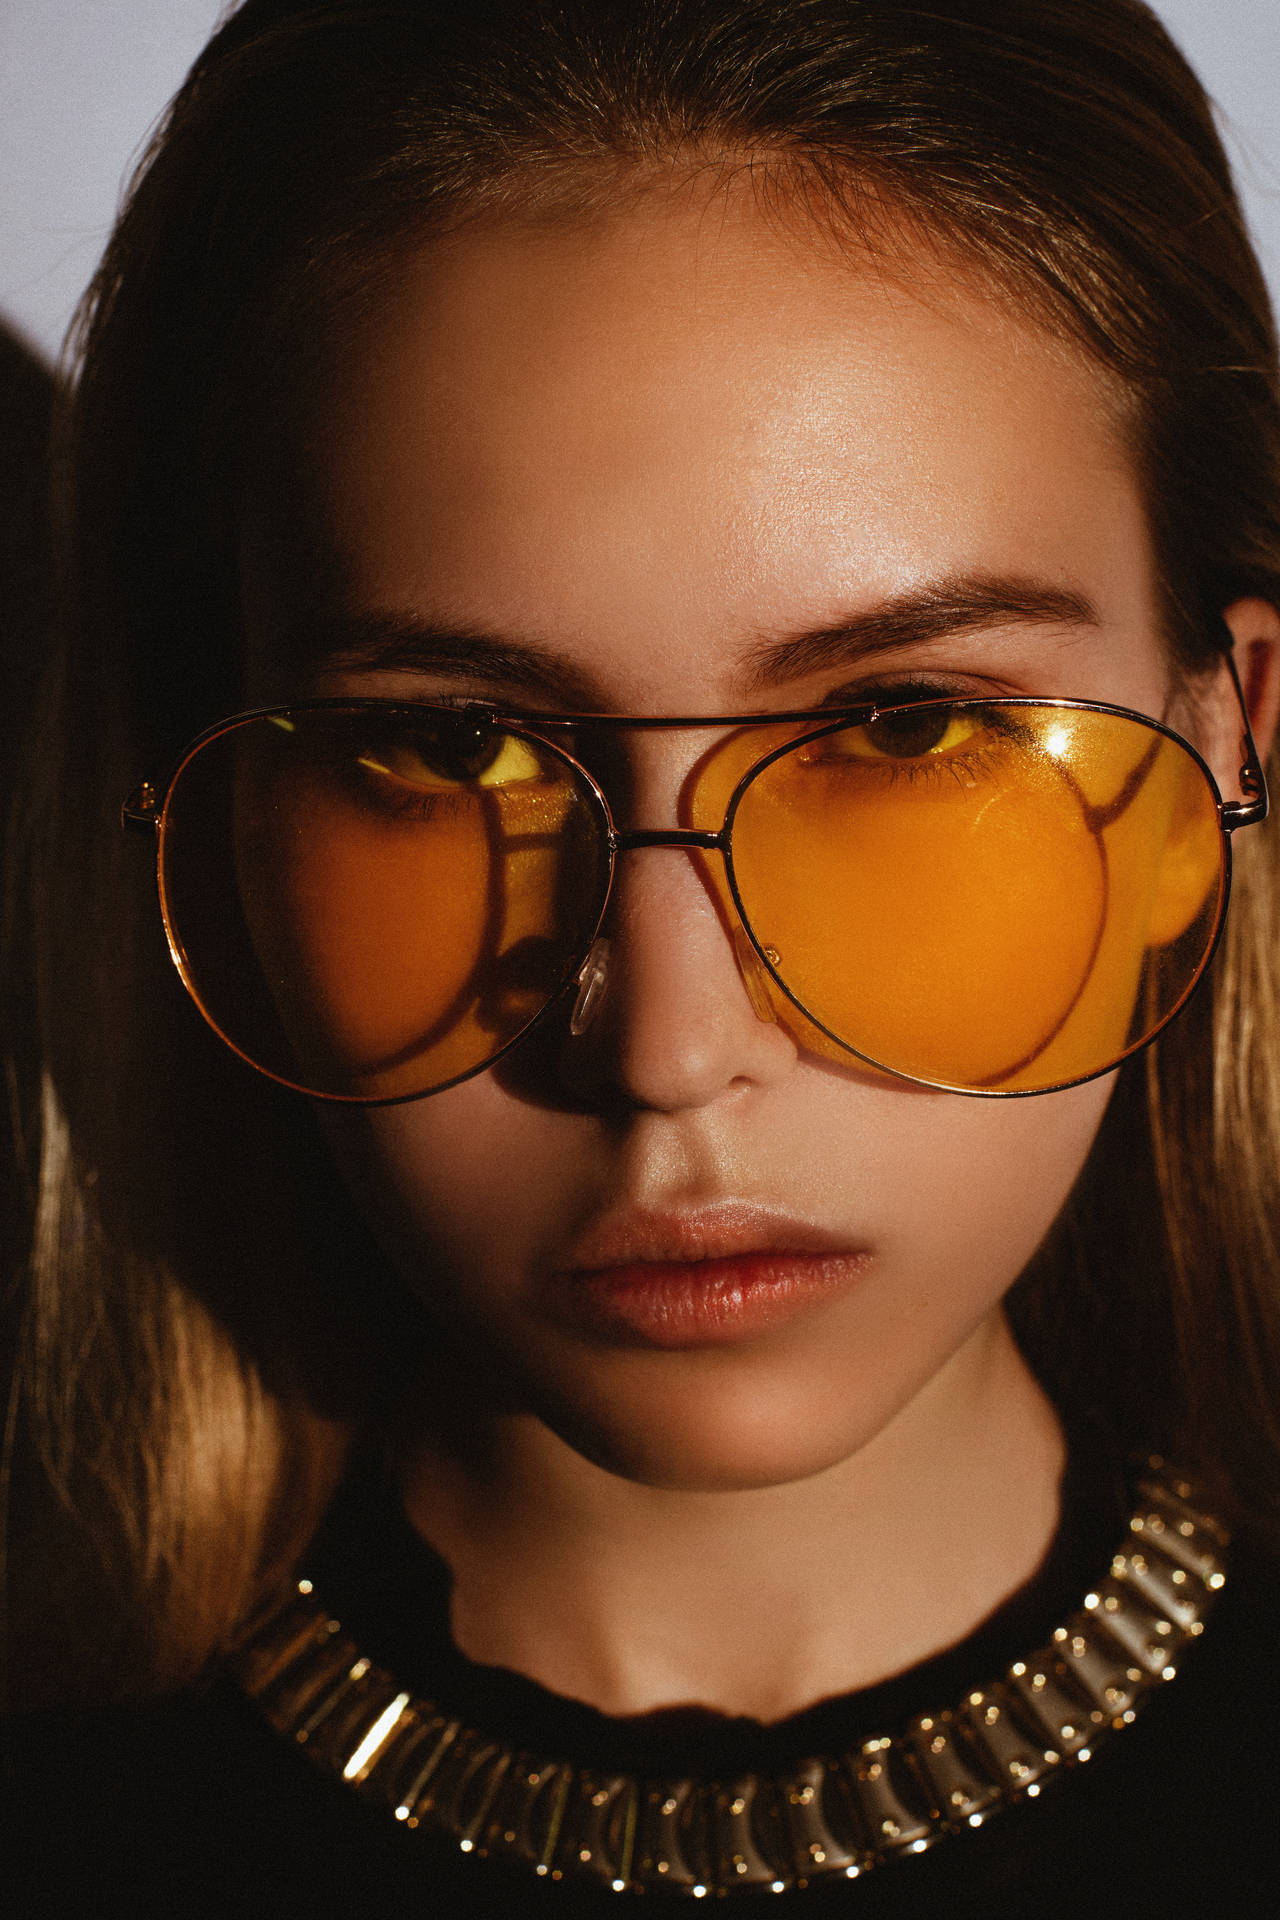 Female Model In Yellow Sunglasses Wallpaper